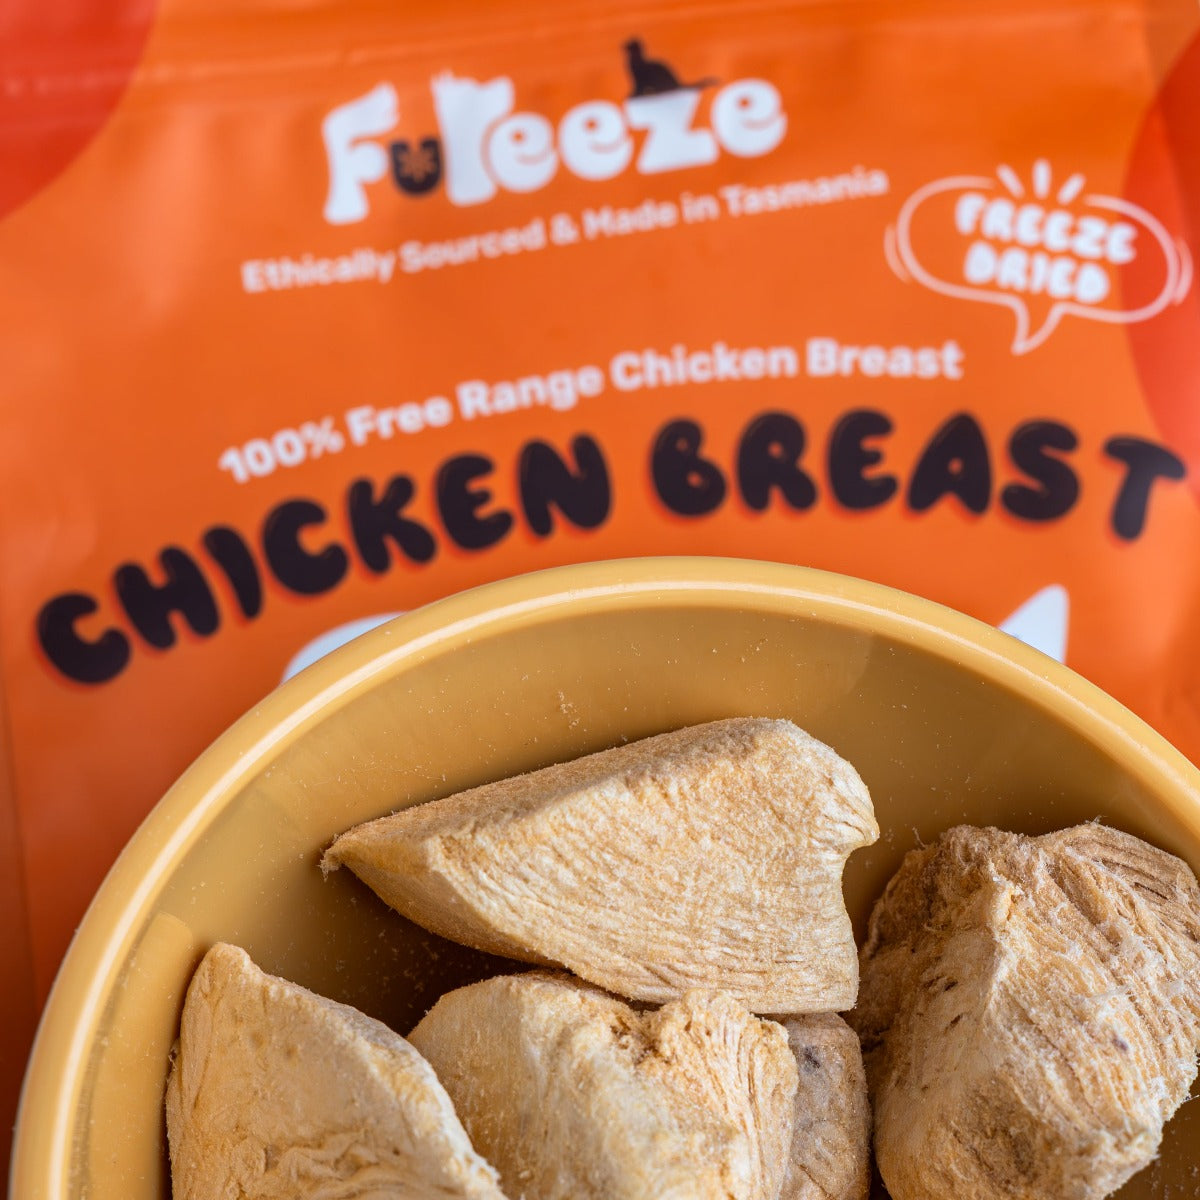 Freeze Dried Free Range Chicken Breast By Fureeze™ 50g